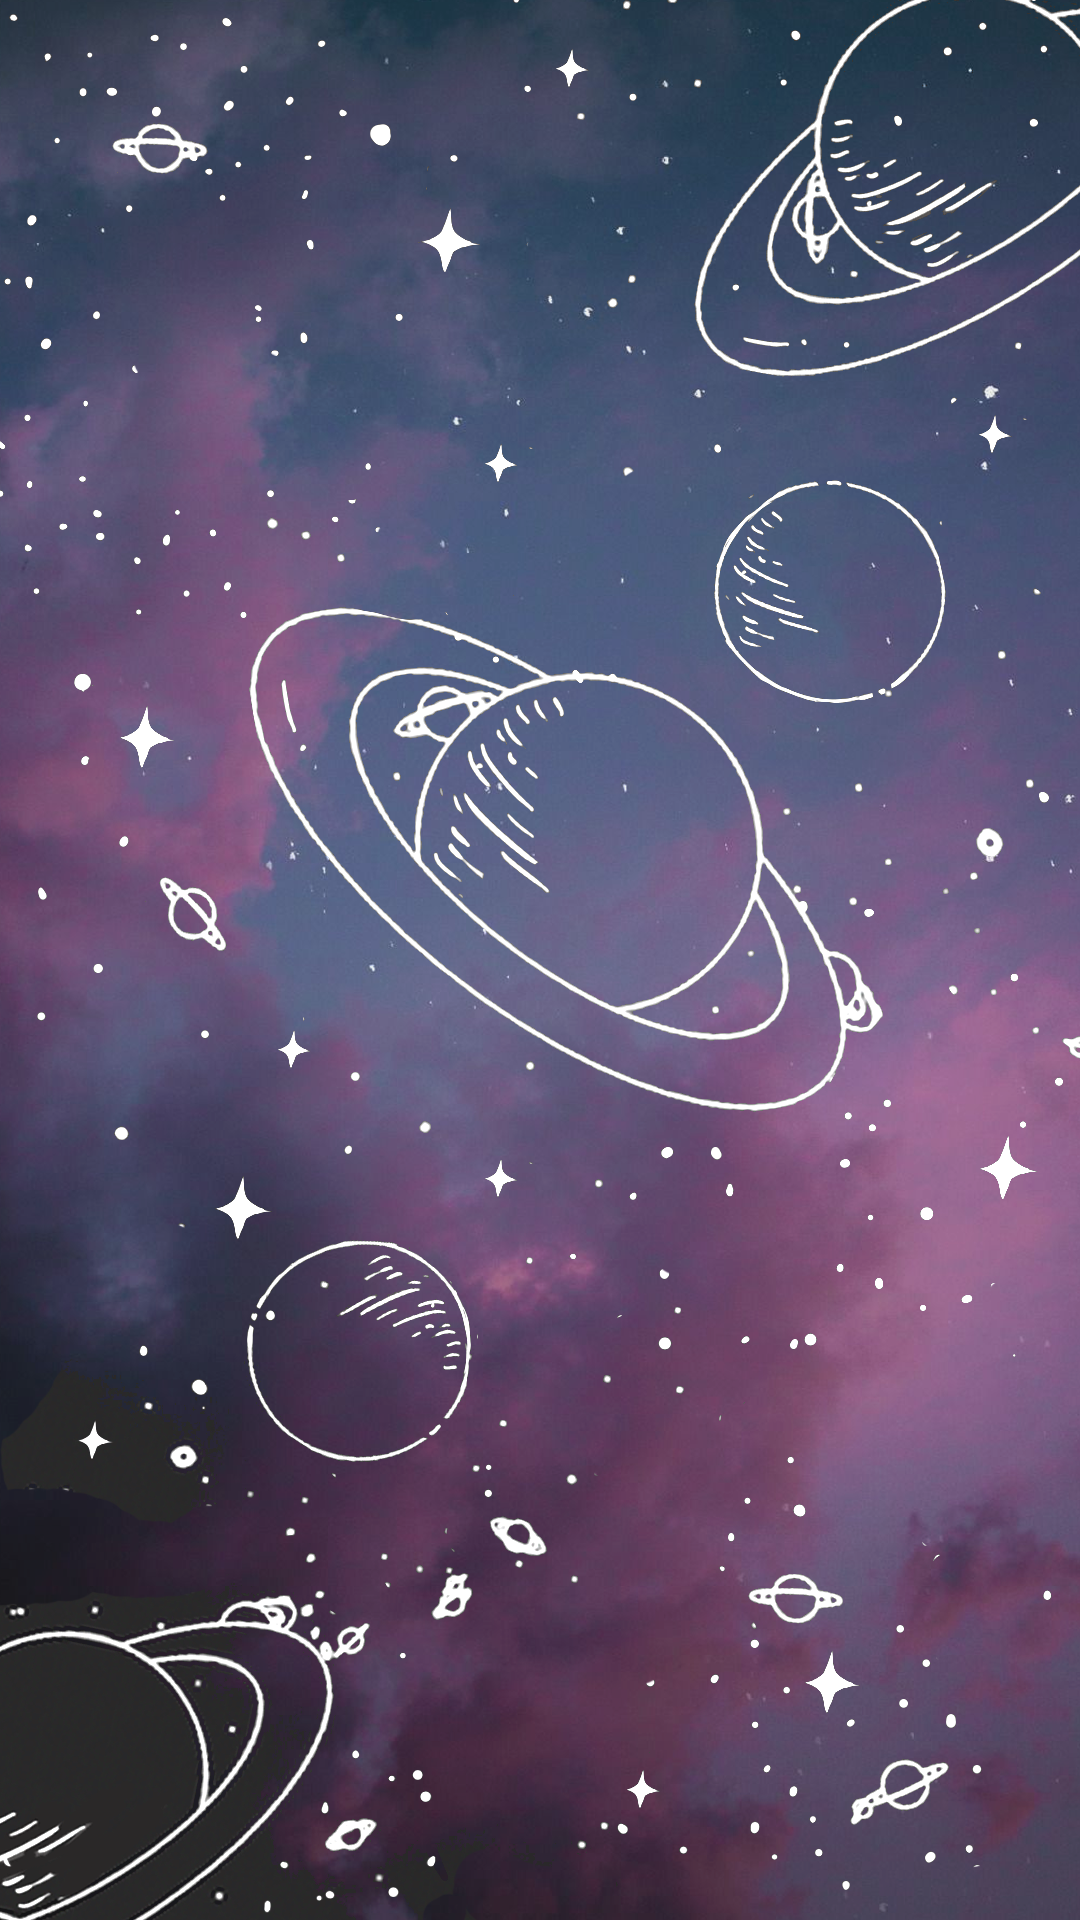 Wallpaper Passagem Espacial by Gocase. Planets wallpaper, Galaxy wallpaper, Wallpaper space